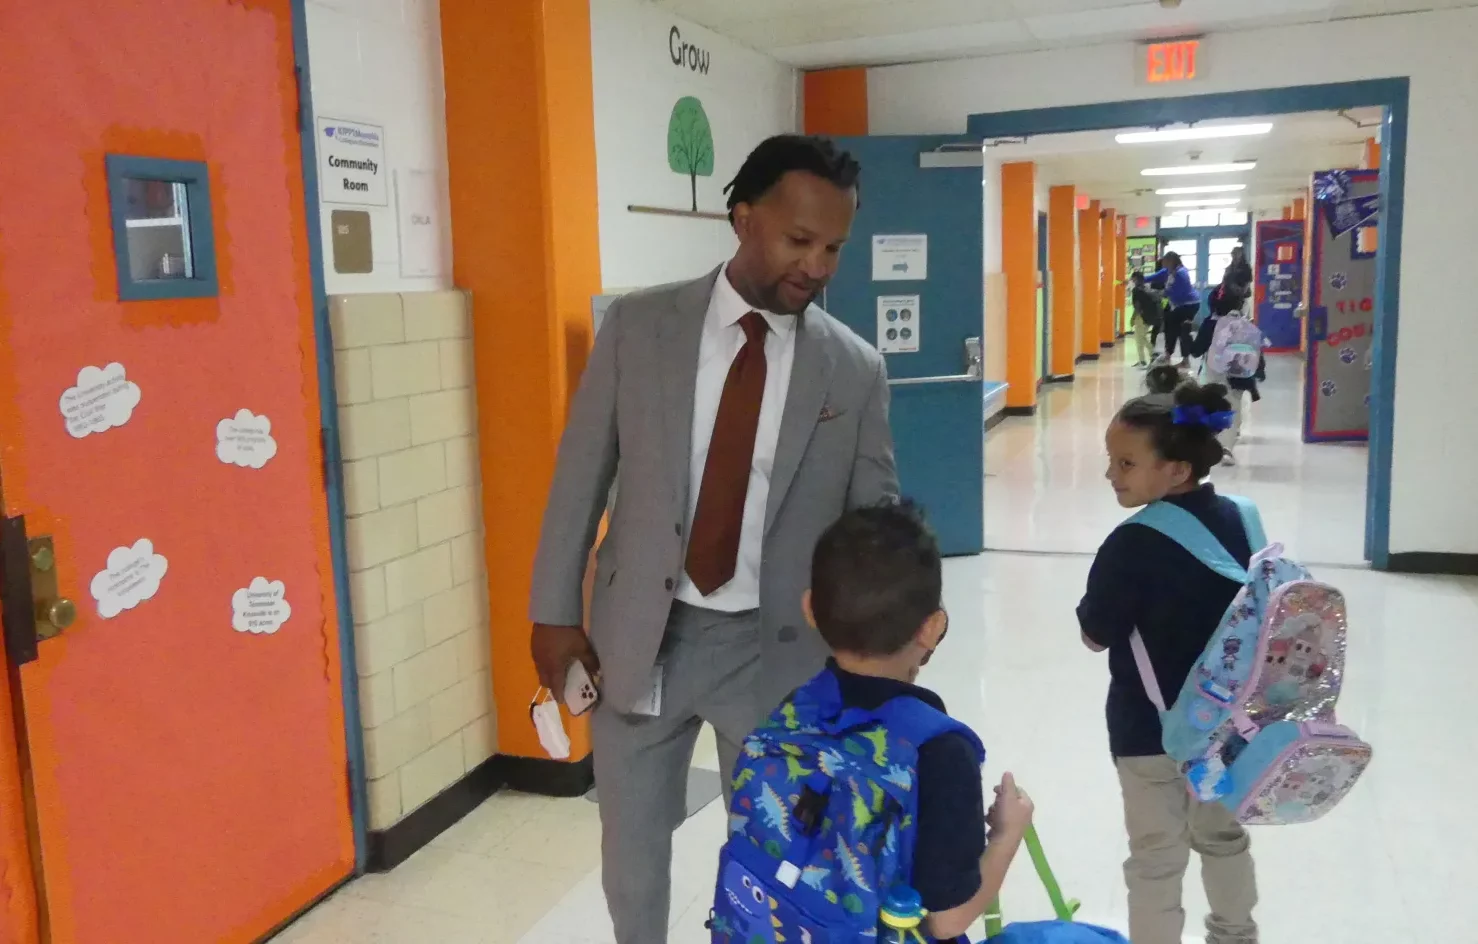 KIPP Memphis CEO Antonio Burt chats with students in a hallway.